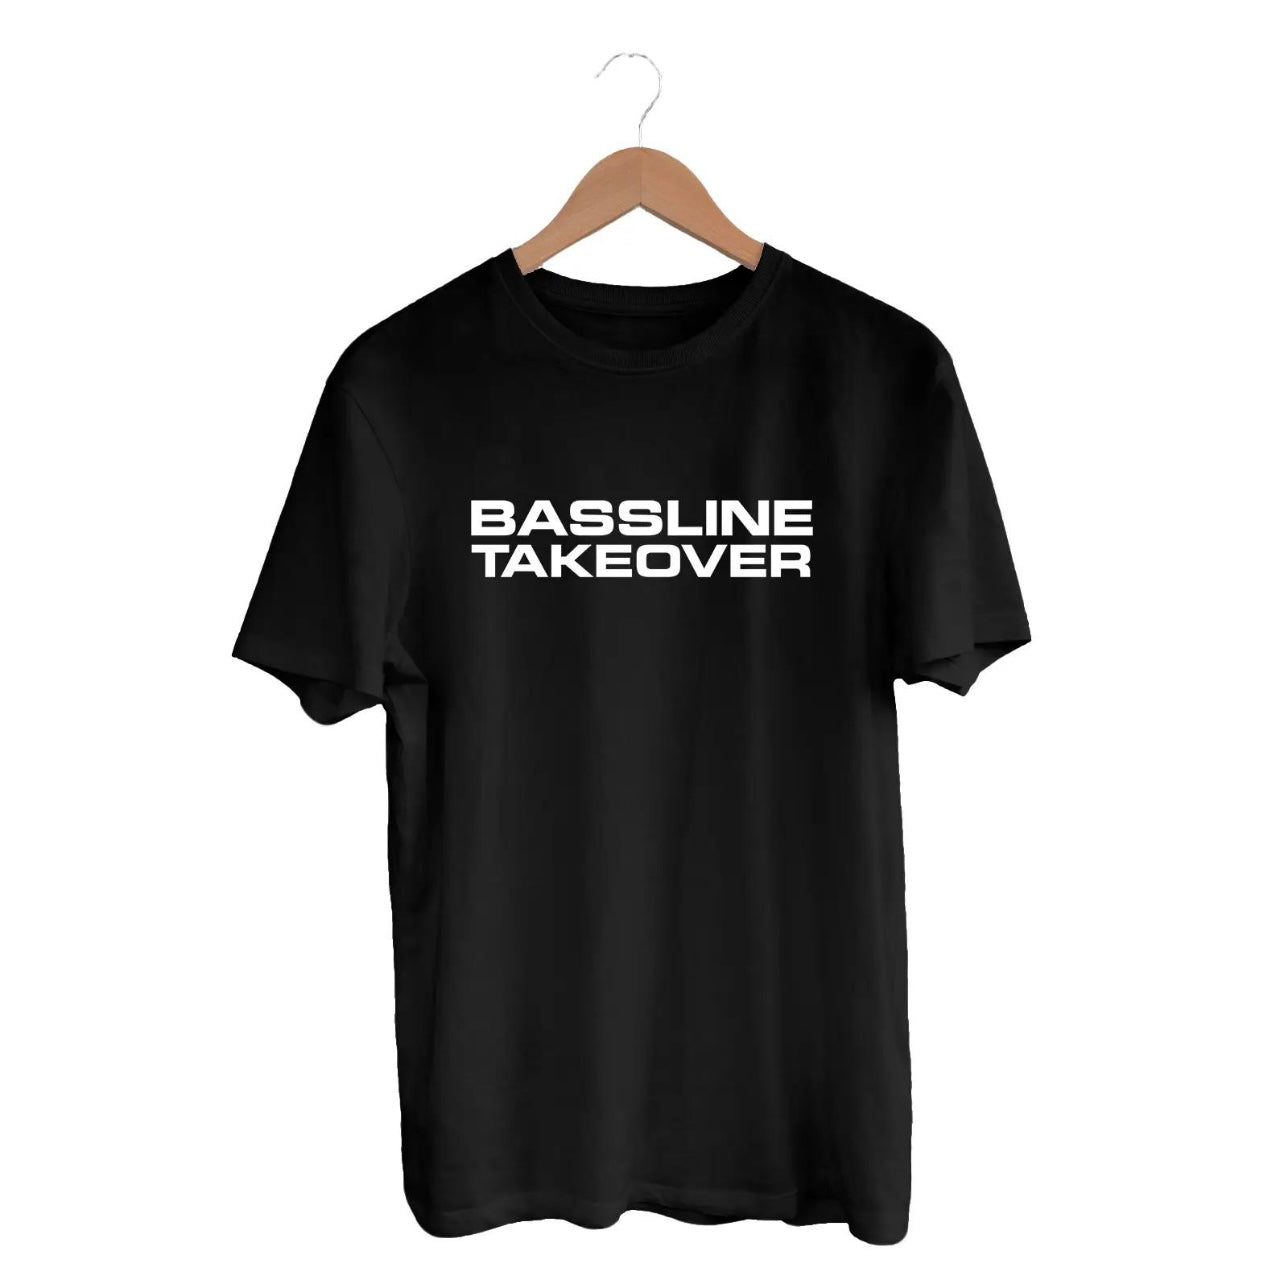 BASSLINE TAKEOVER T-SHIRT (WHITE)